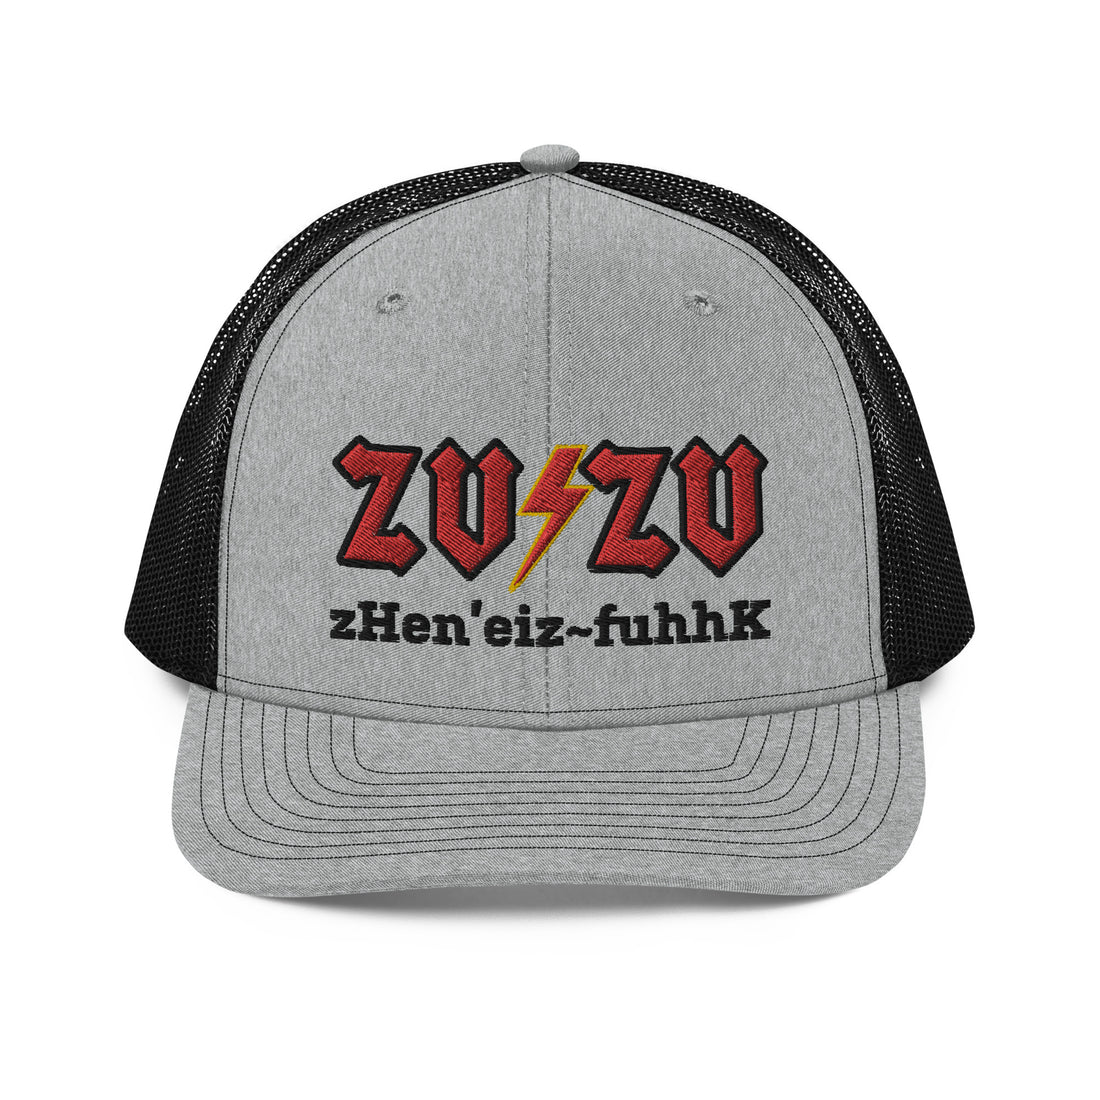 AC/DC Trucker Hat